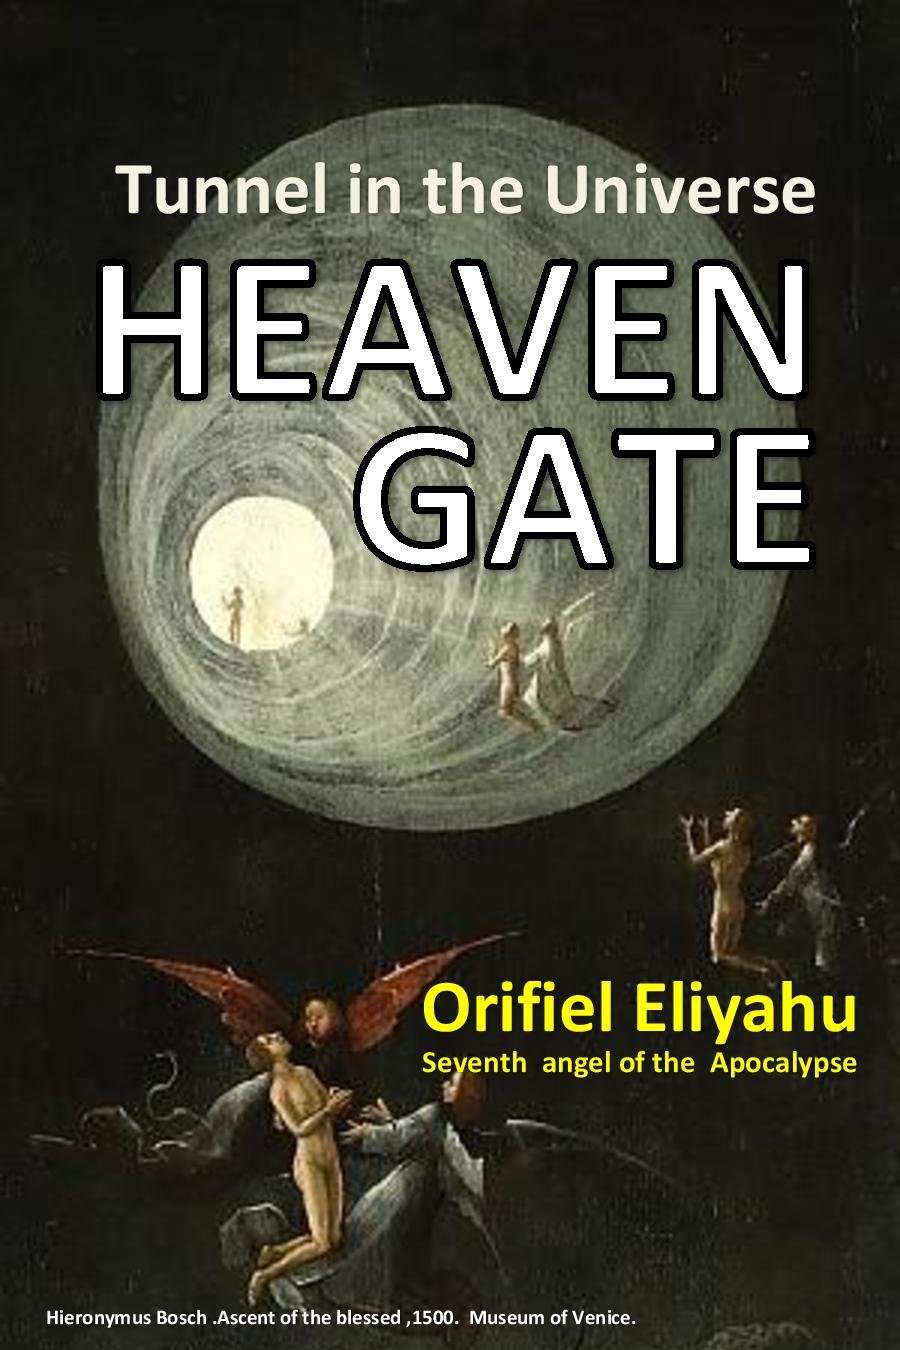 Tunnel in the universe Heaven gate